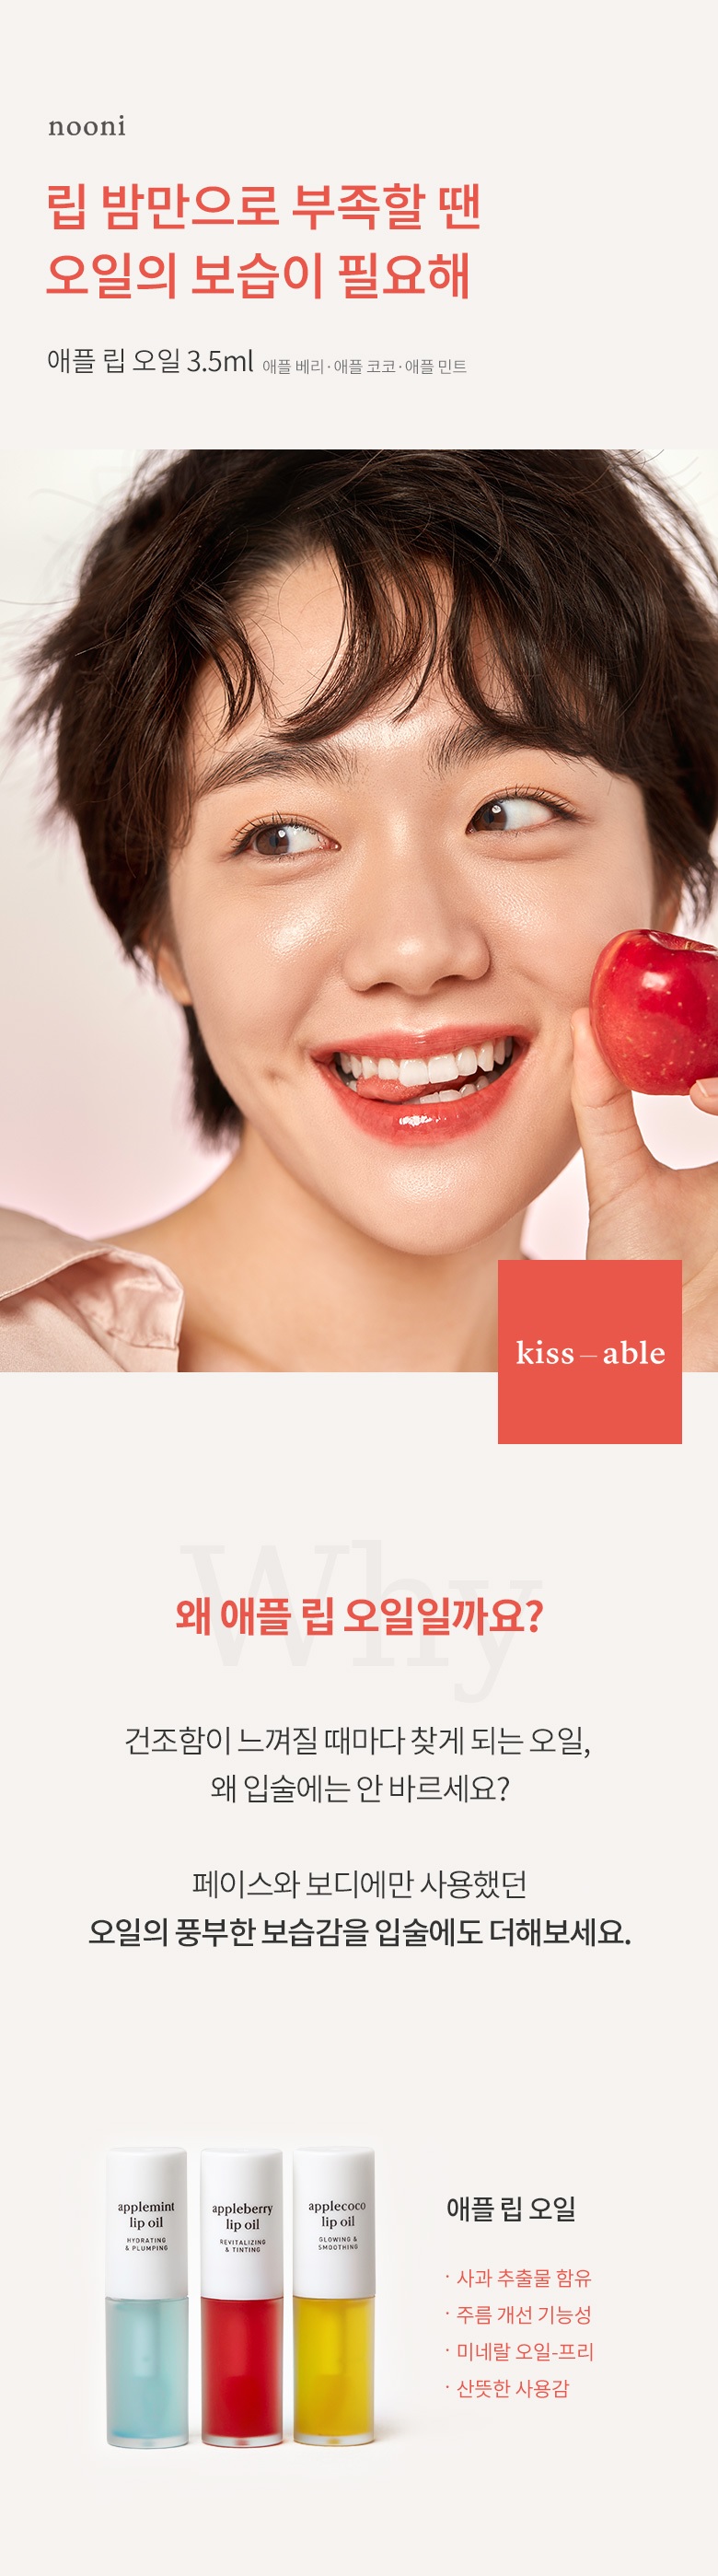 MEMEBOX Nooni Appleberry Lip Oil korean cosmetic makeup product online shop malaysia china usa1